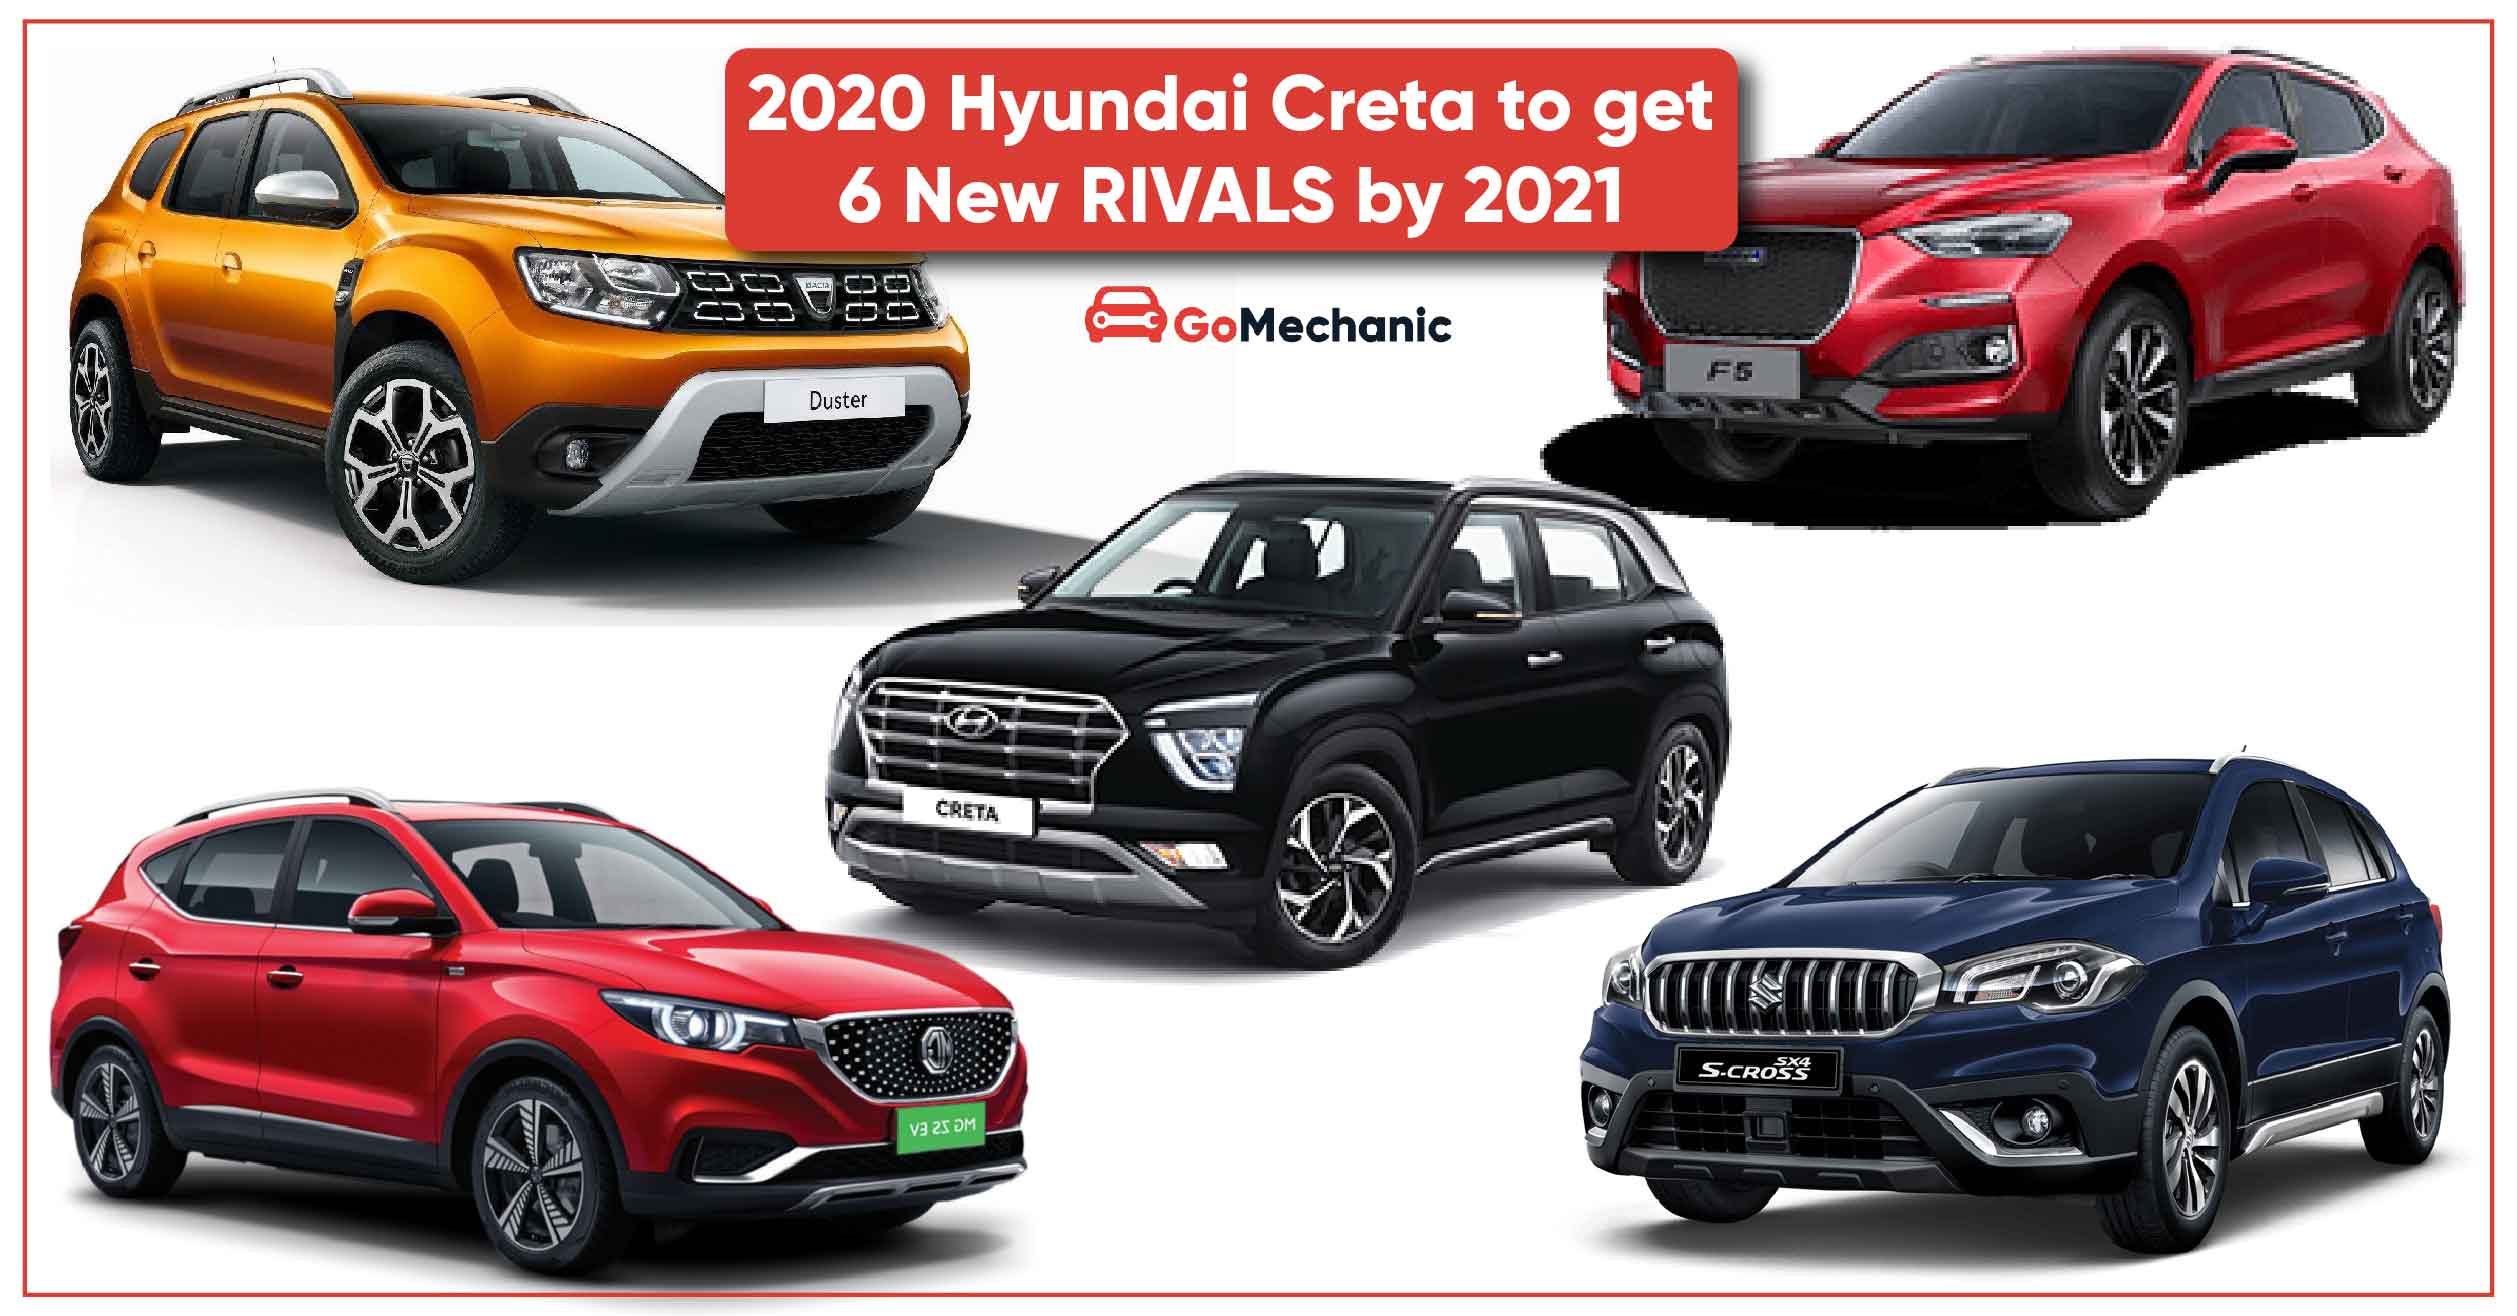 2020 Hyundai Creta to get 6 New RIVALS by 2021